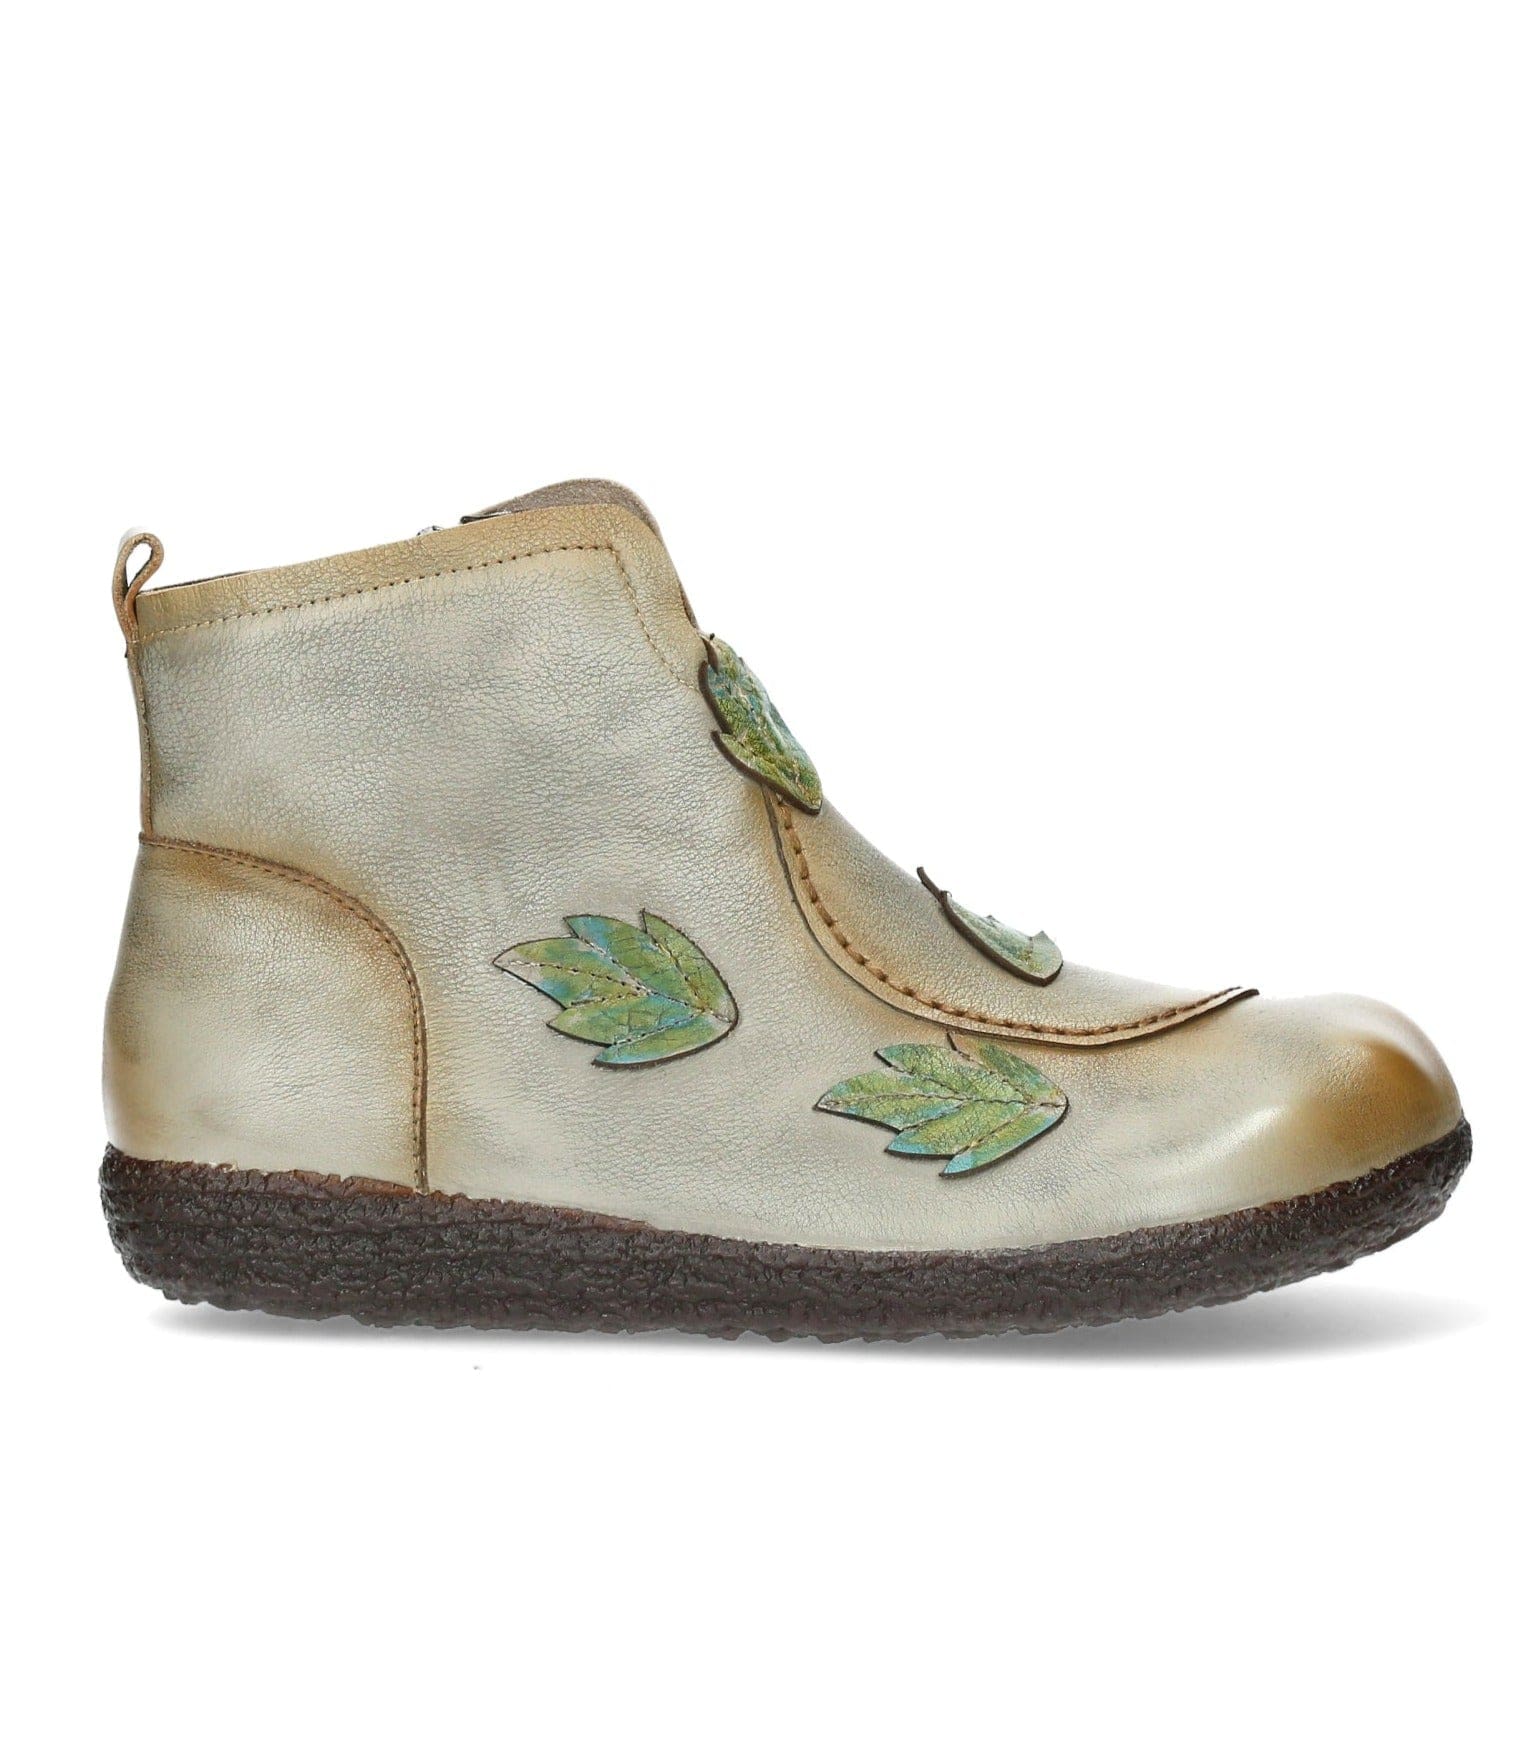 Chaussure GOCNO 186 - 35 / Gris - Boots